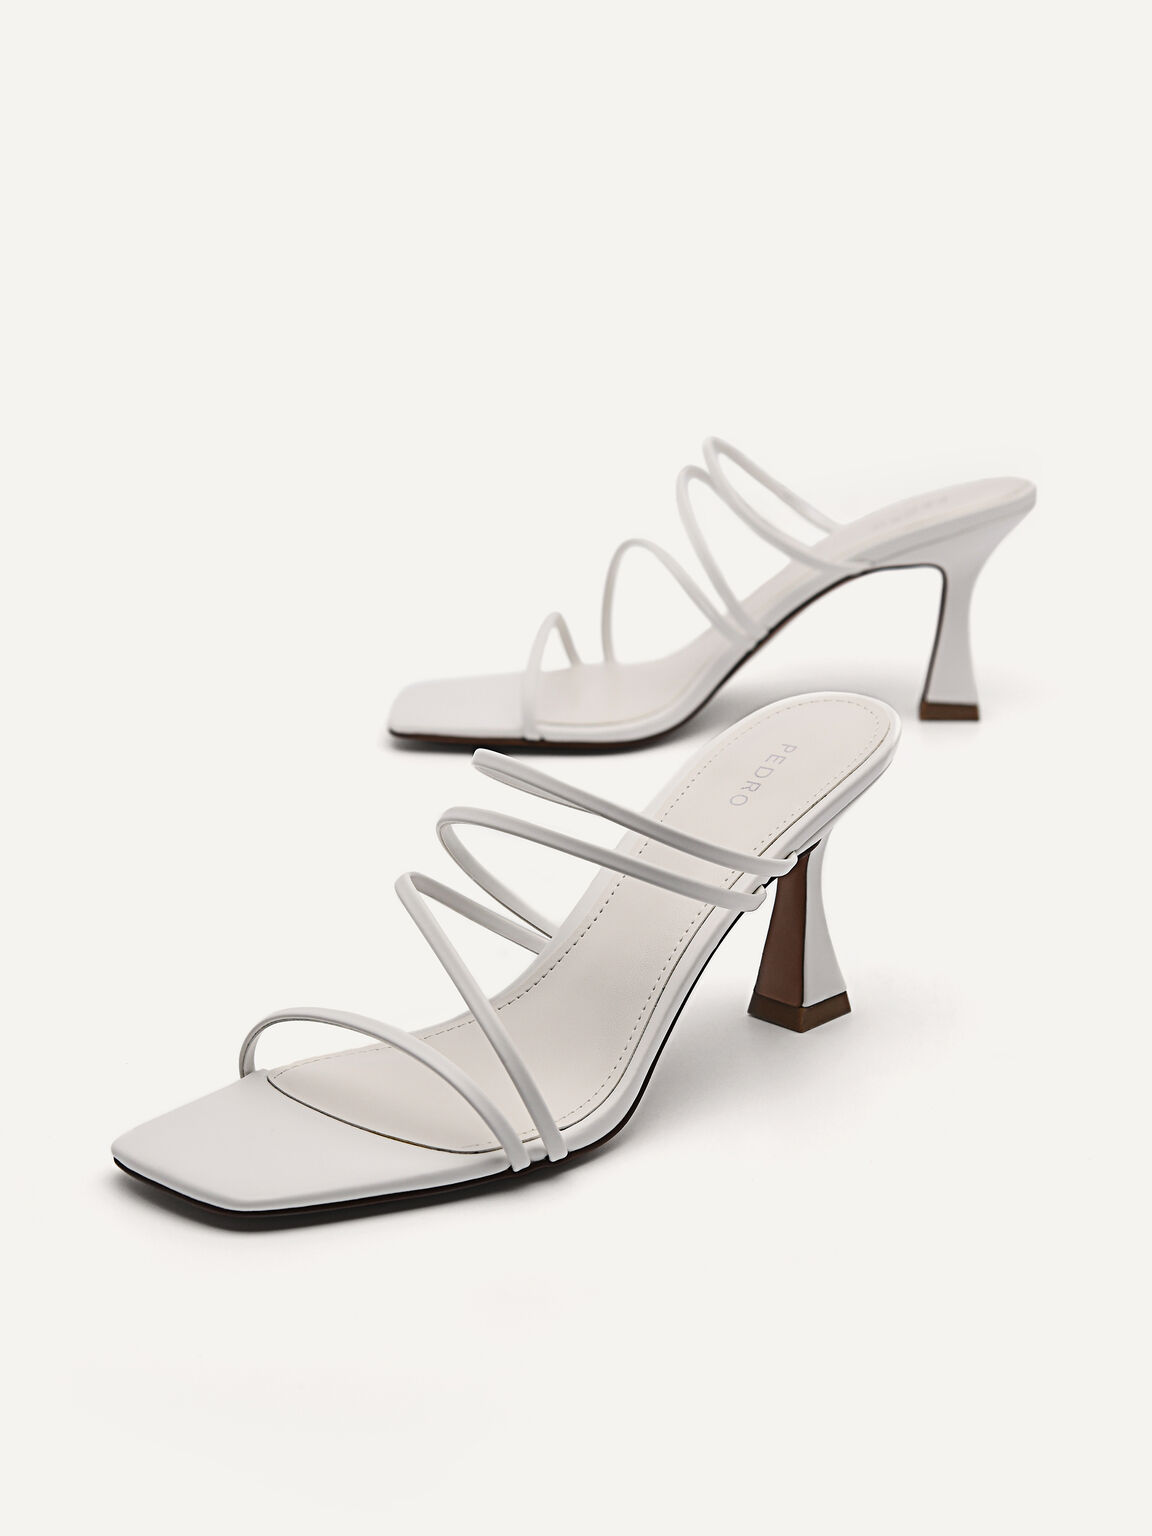 Strappy Heel Sandals - White, White, hi-res